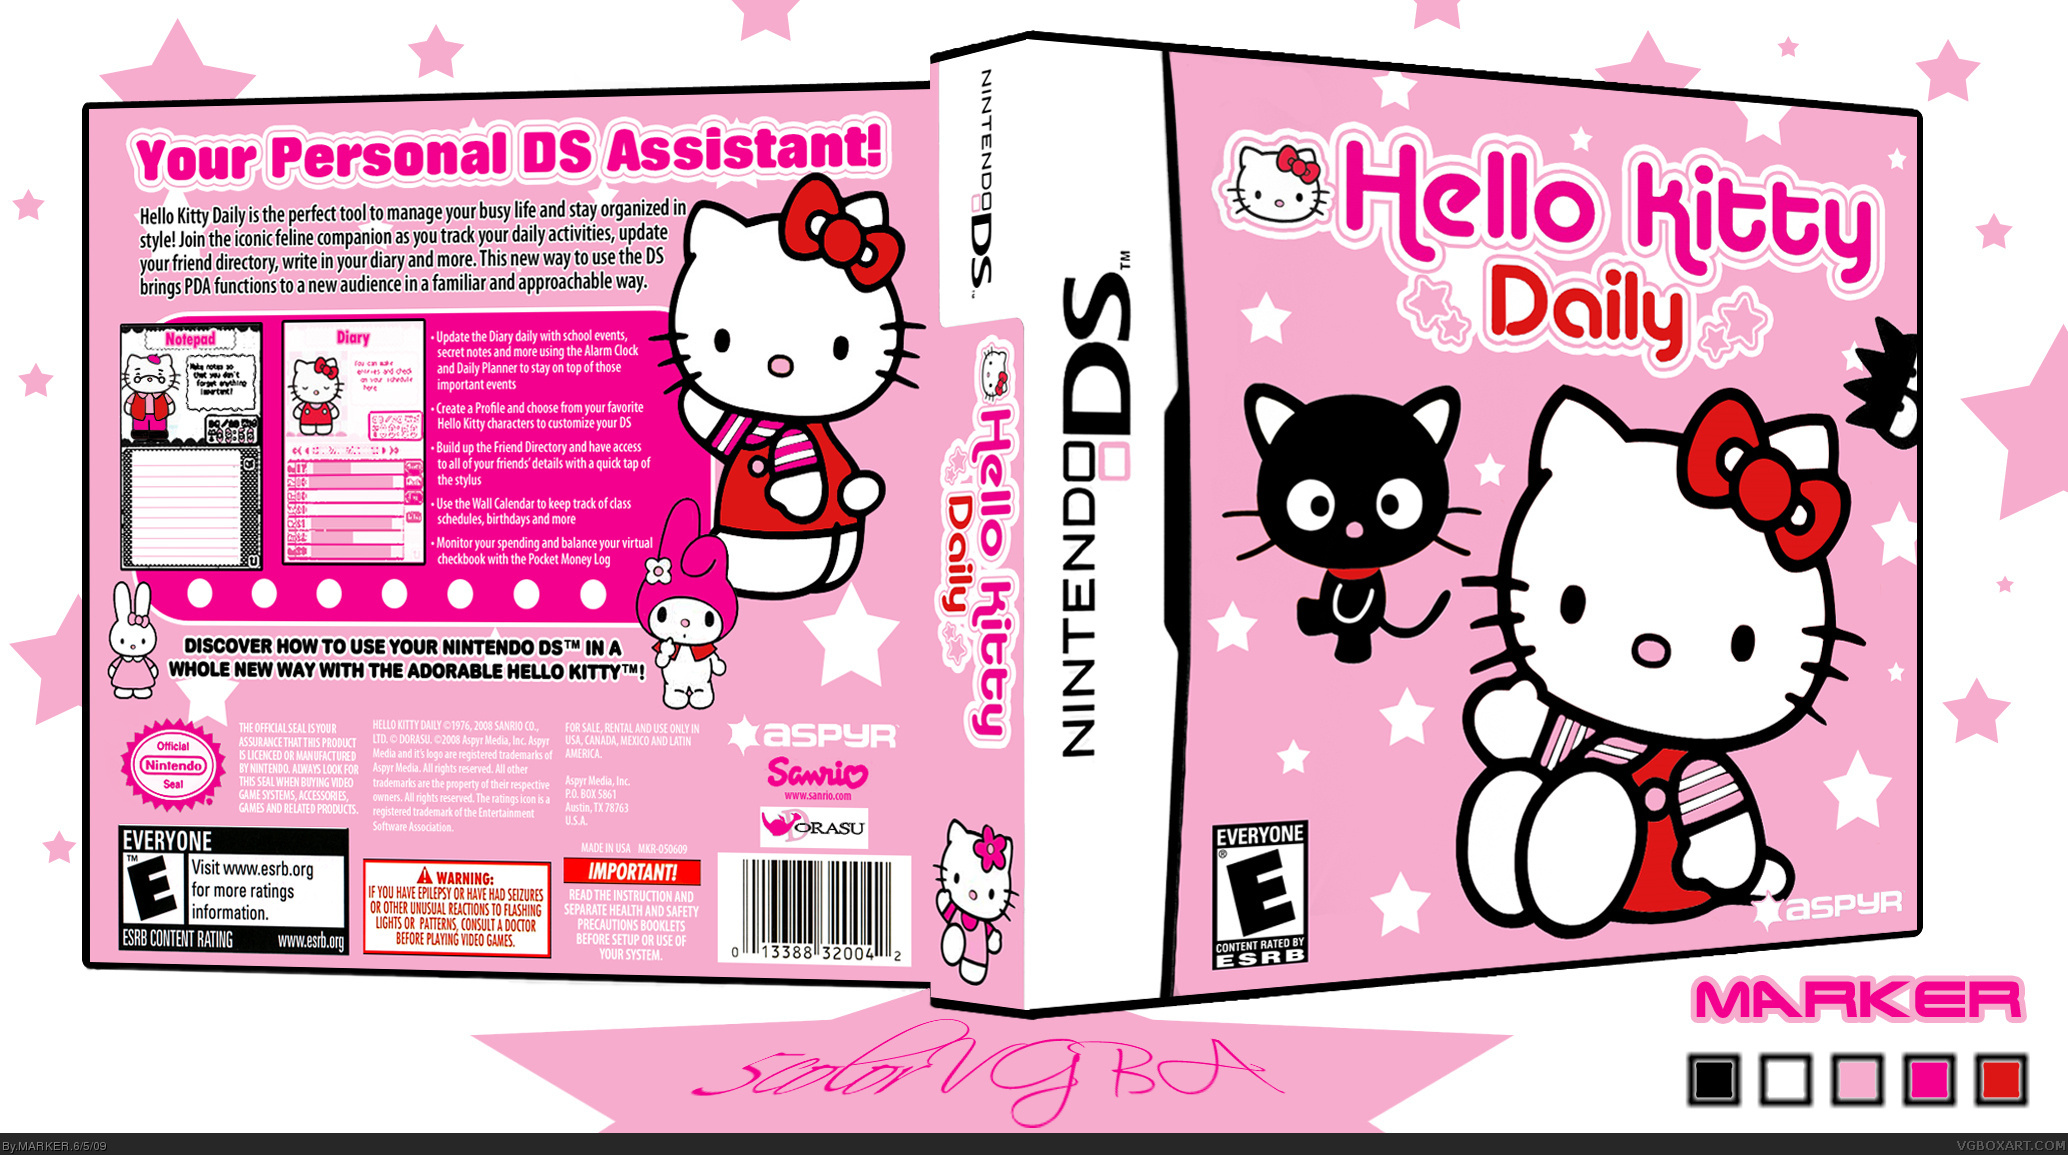 Hello Kitty Daily box cover